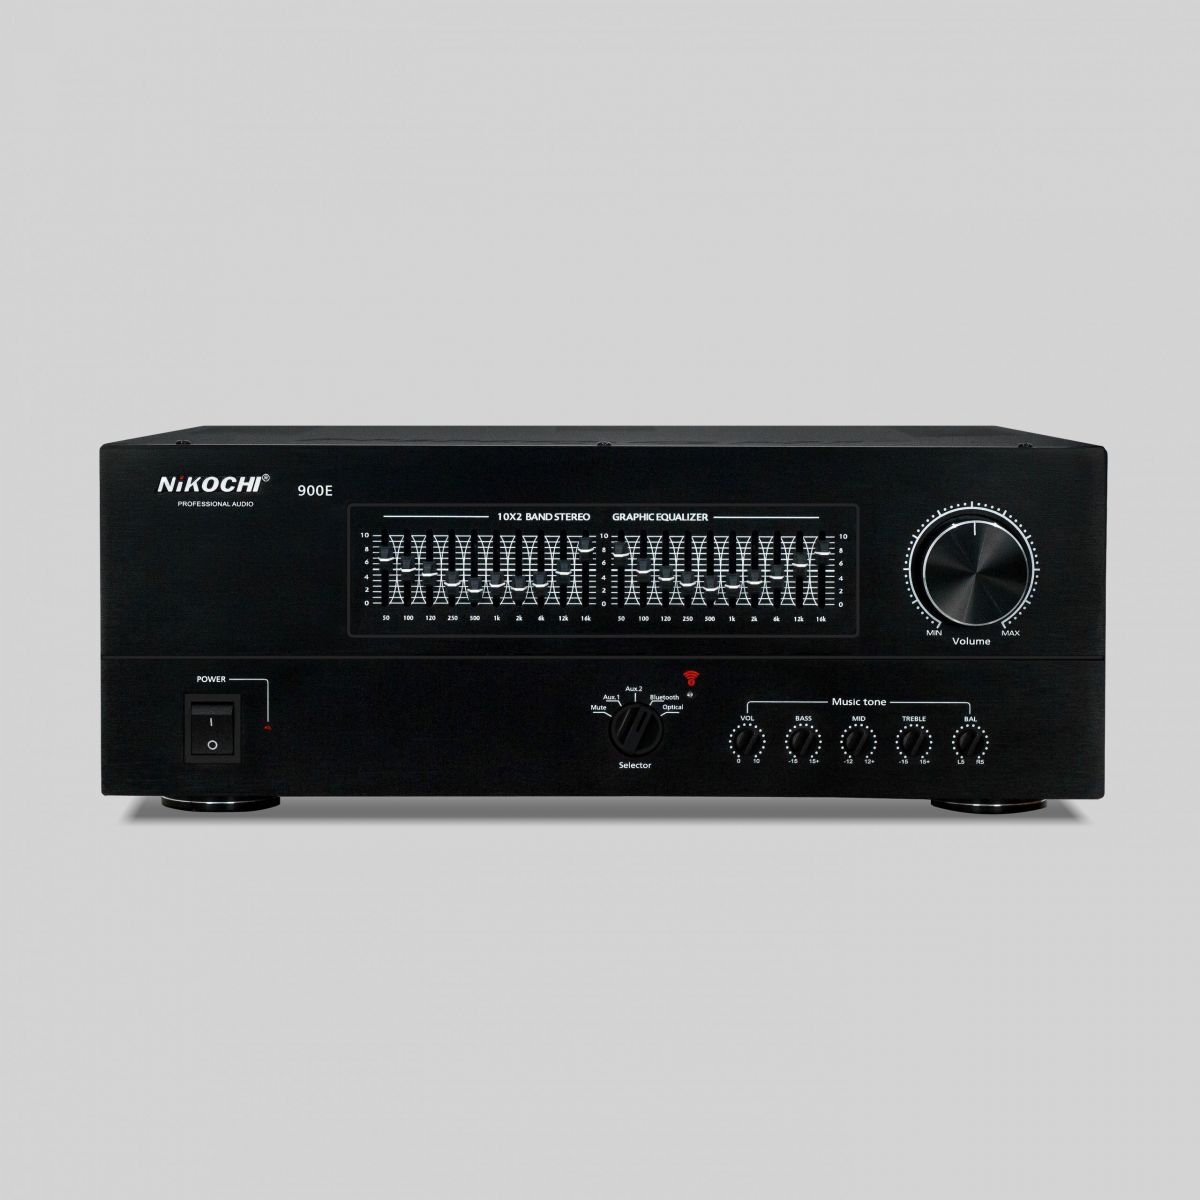 Amplifier Nikochi 900E